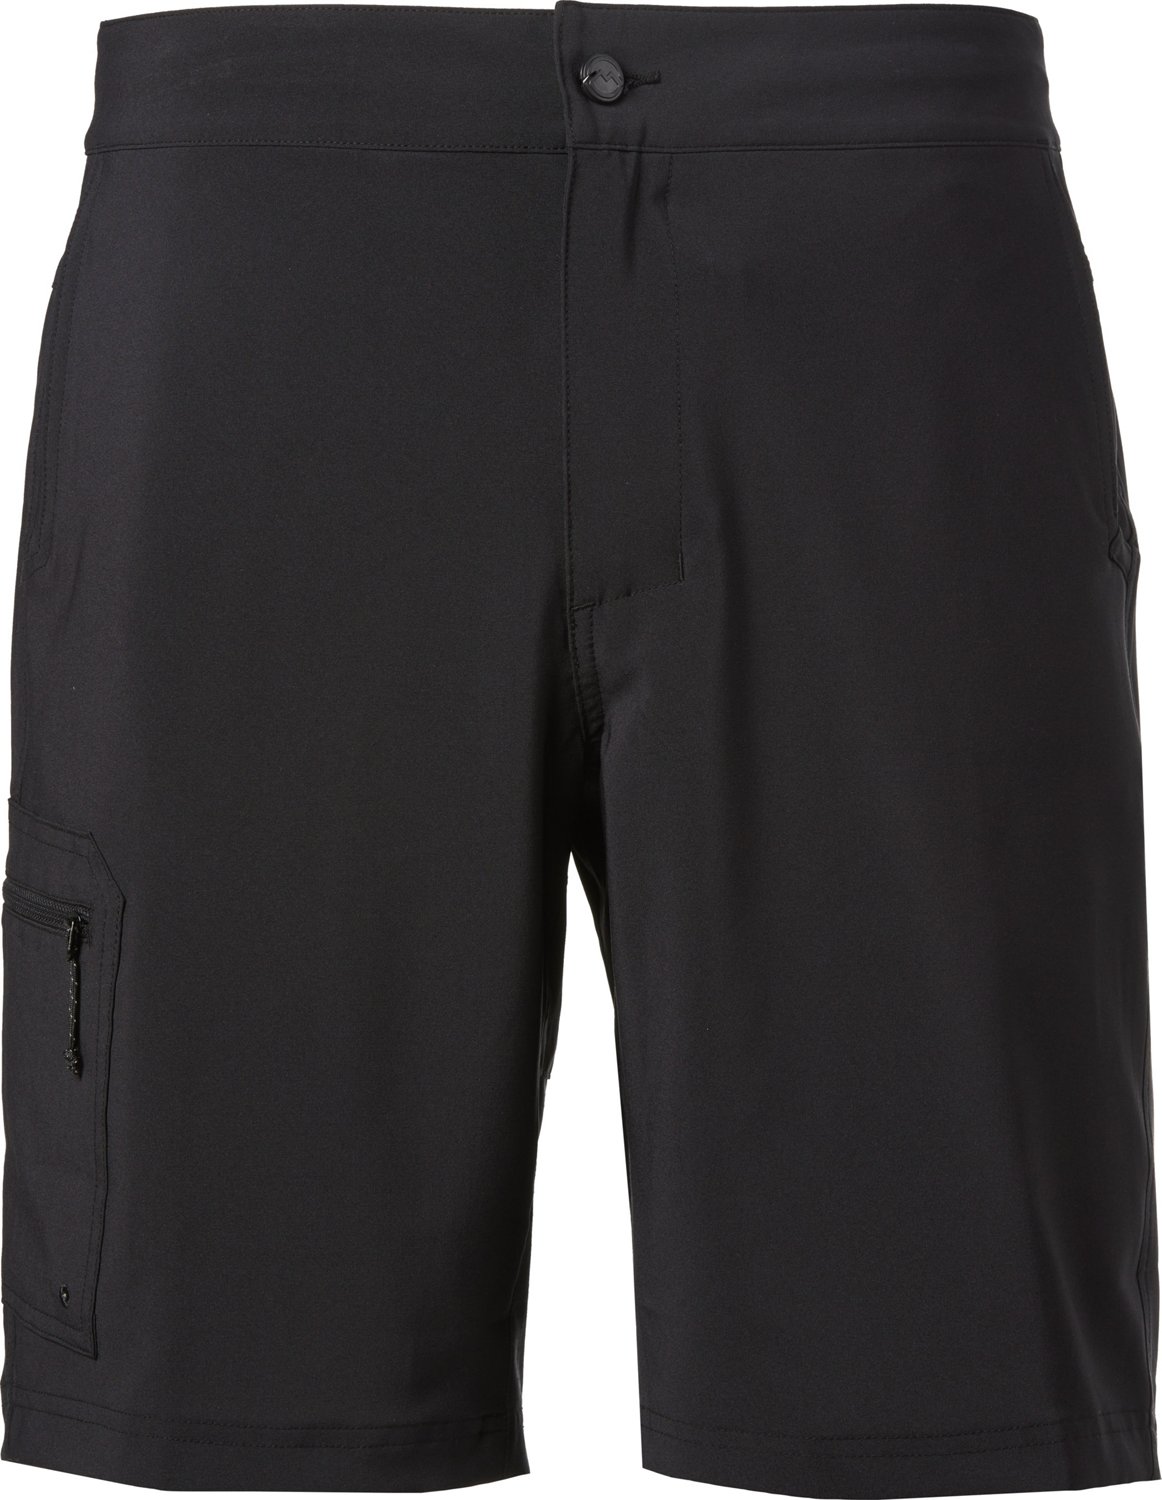 Men's Shorts By Magellan Outdoors | Academy